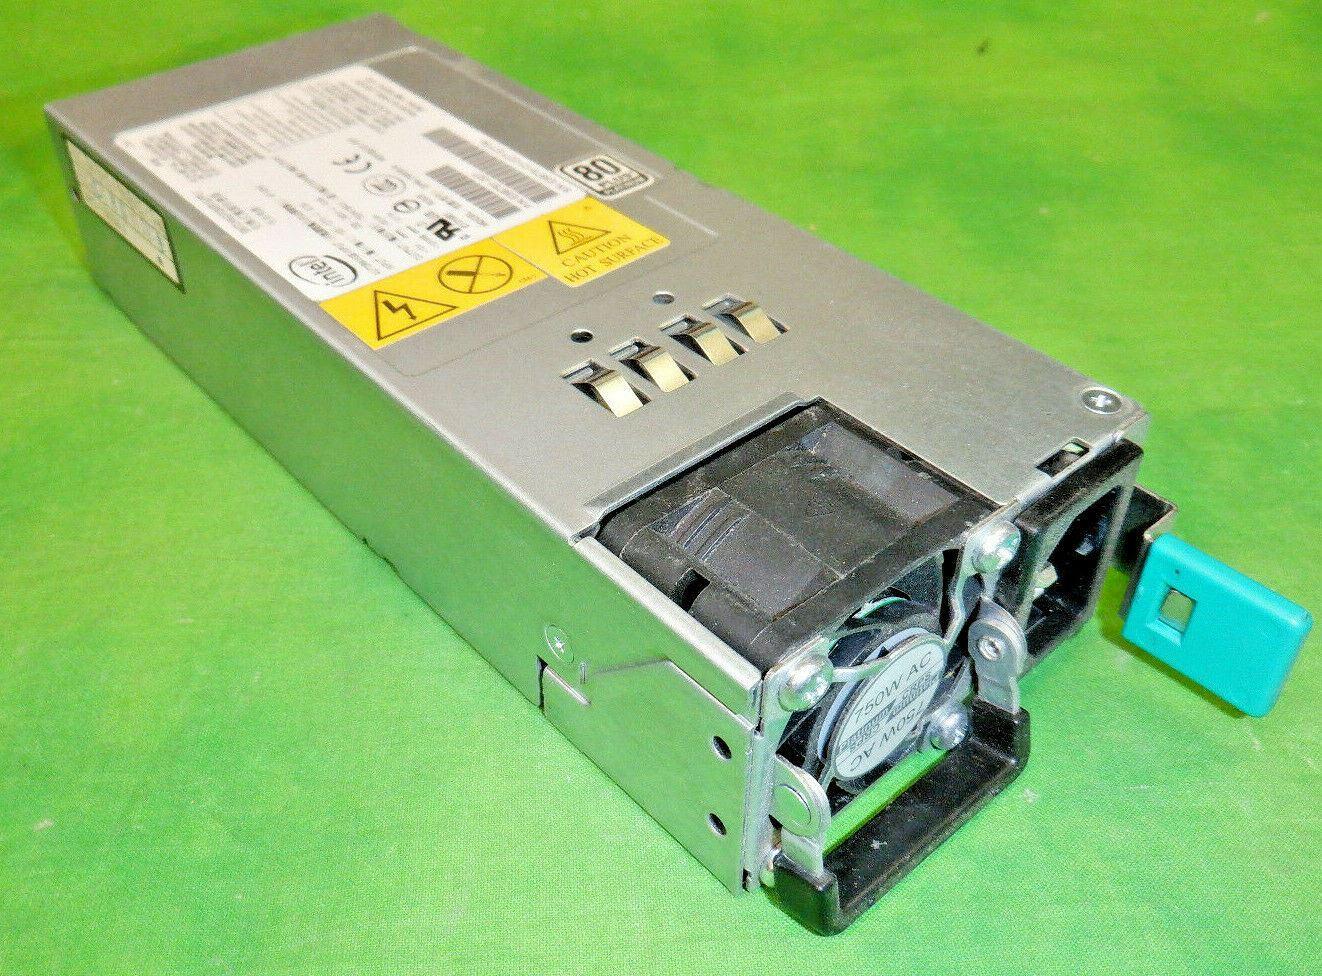 DPS 750XB e98791 007 intel e98791 007 750w common redundant power supply platium efficiency for intel server